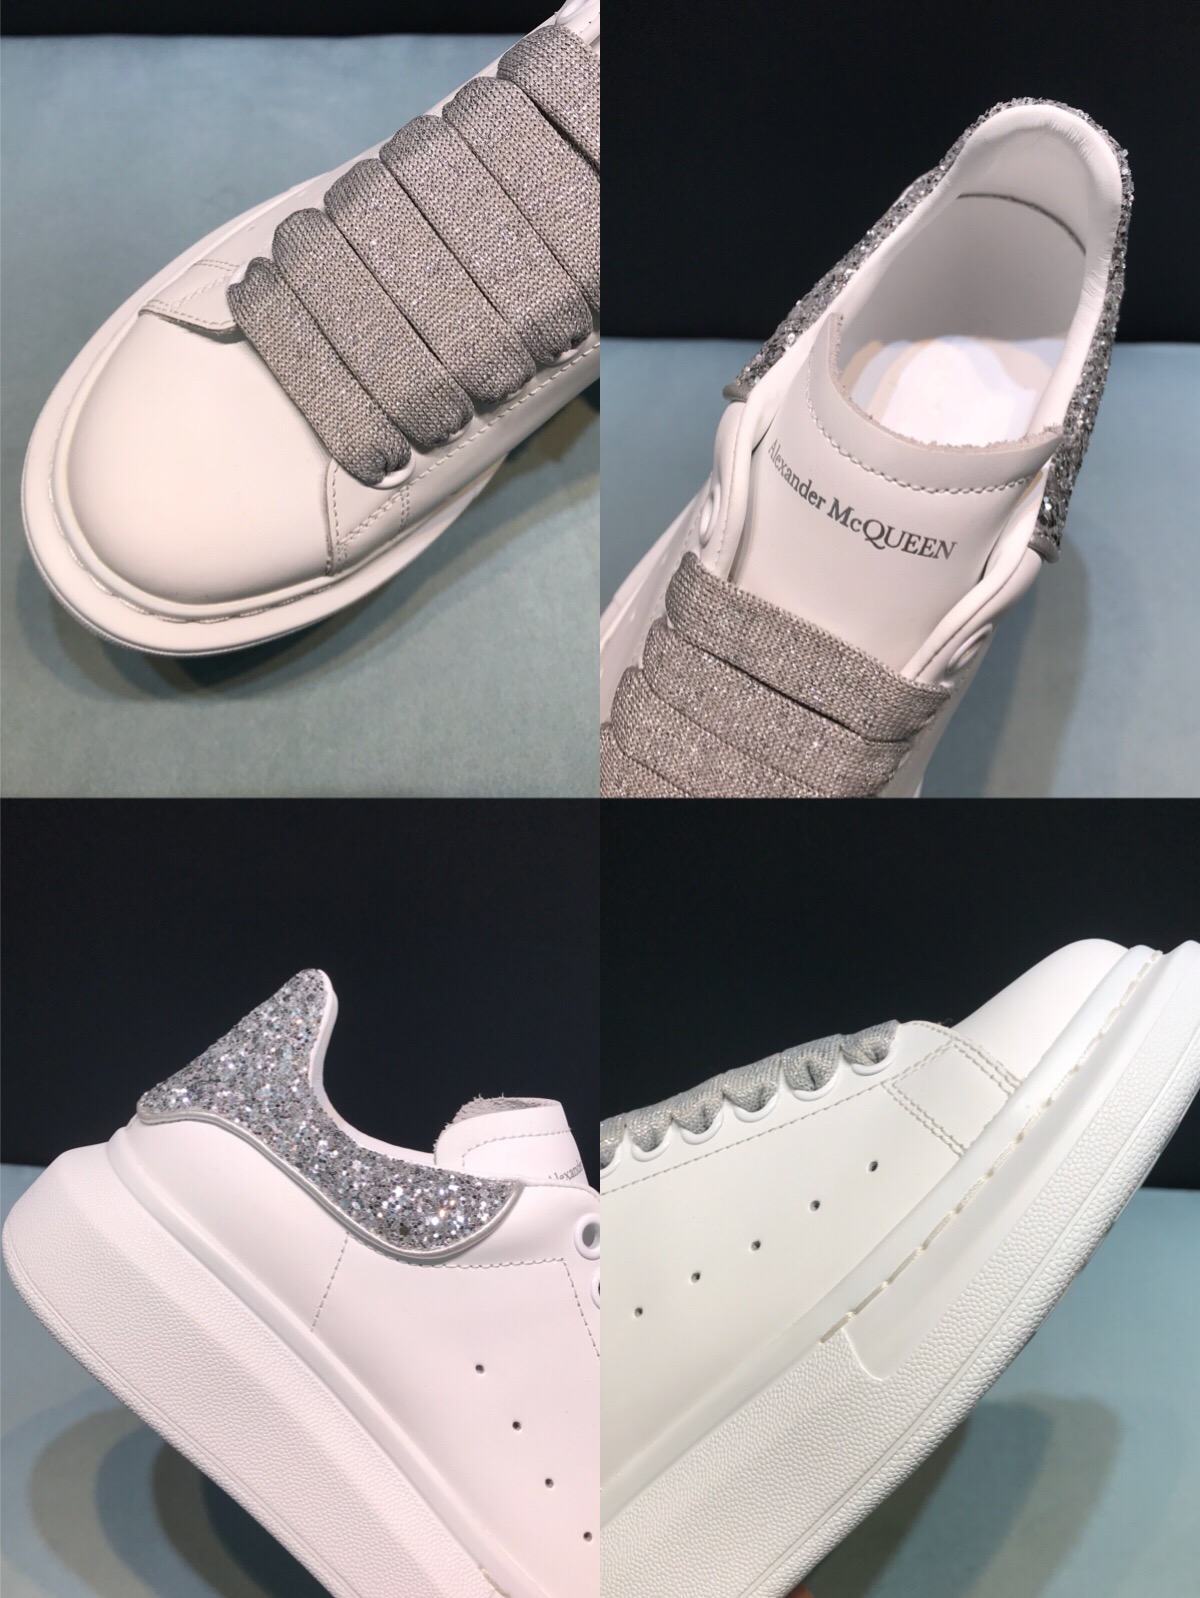 Alexander McQueen Sneaker Oversized Gray Lace-up